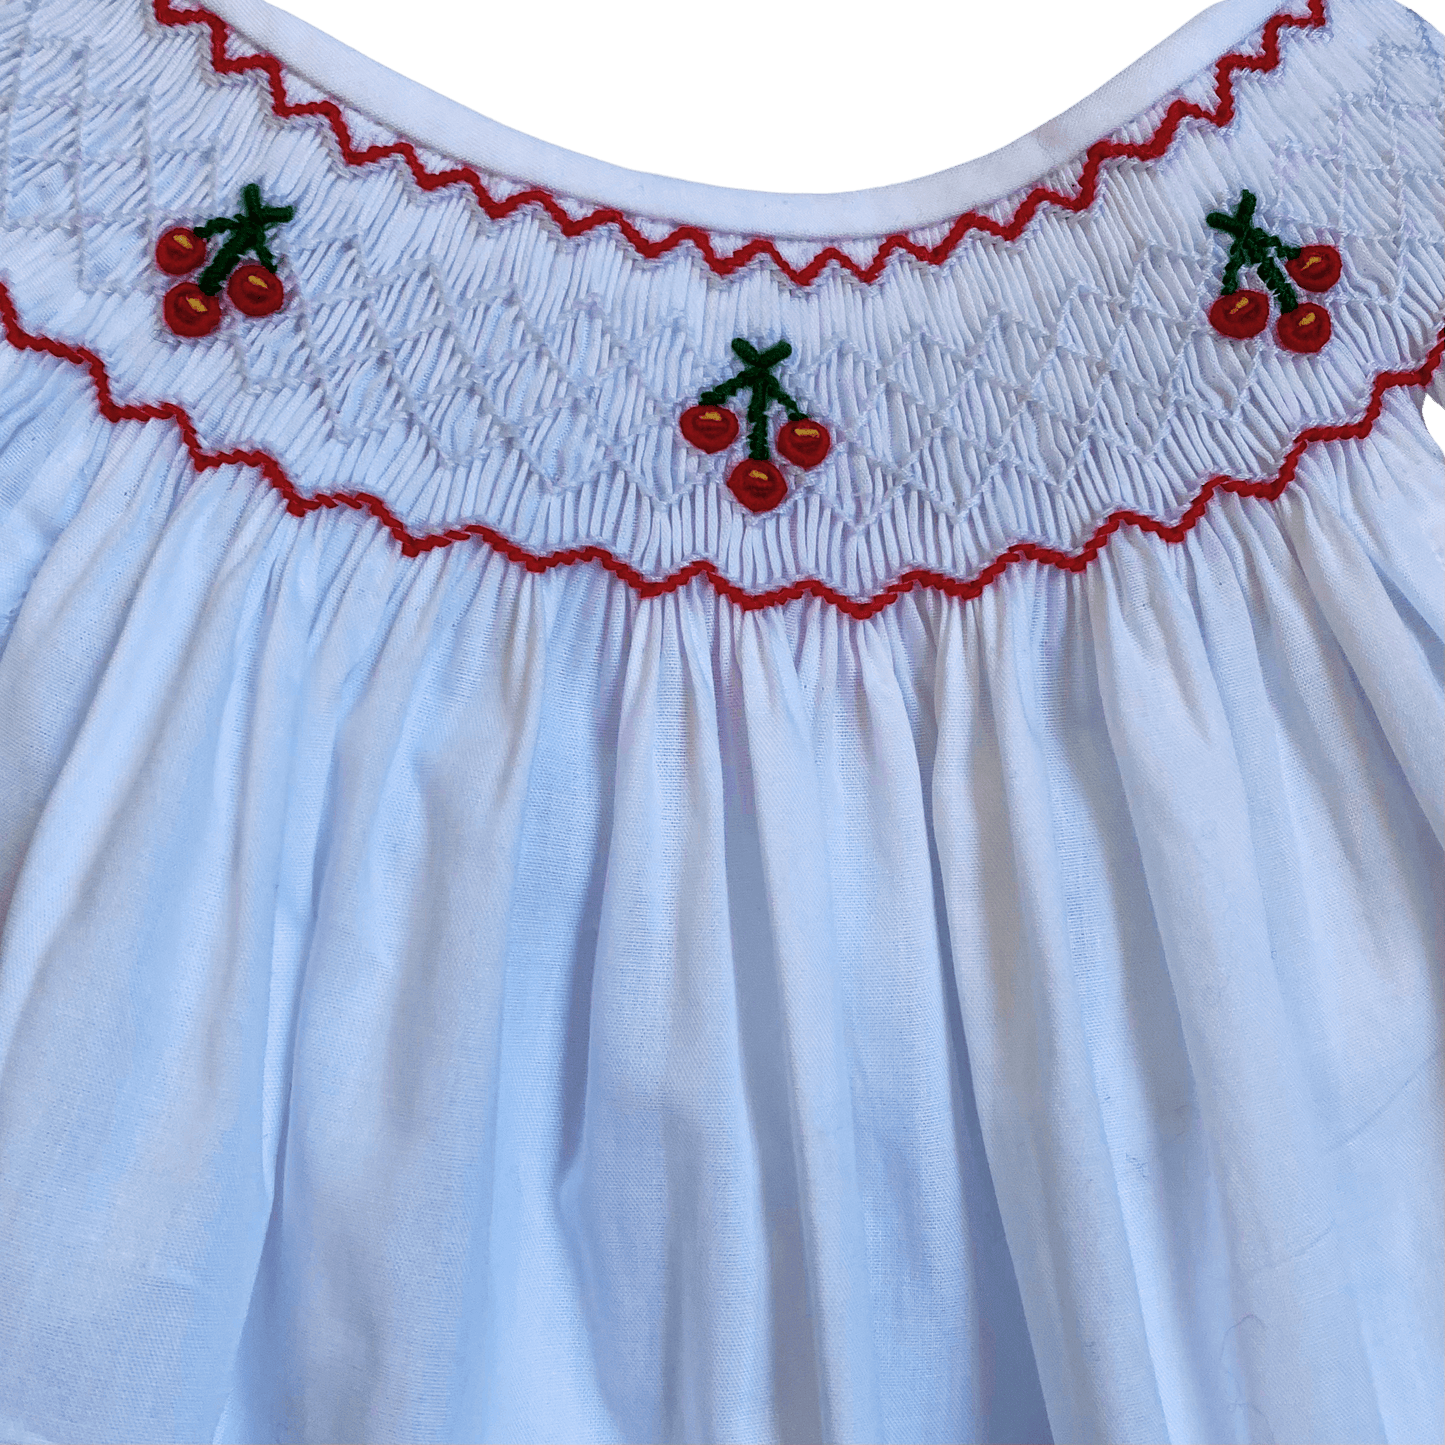 Smocked White Cherry Bishop Dress